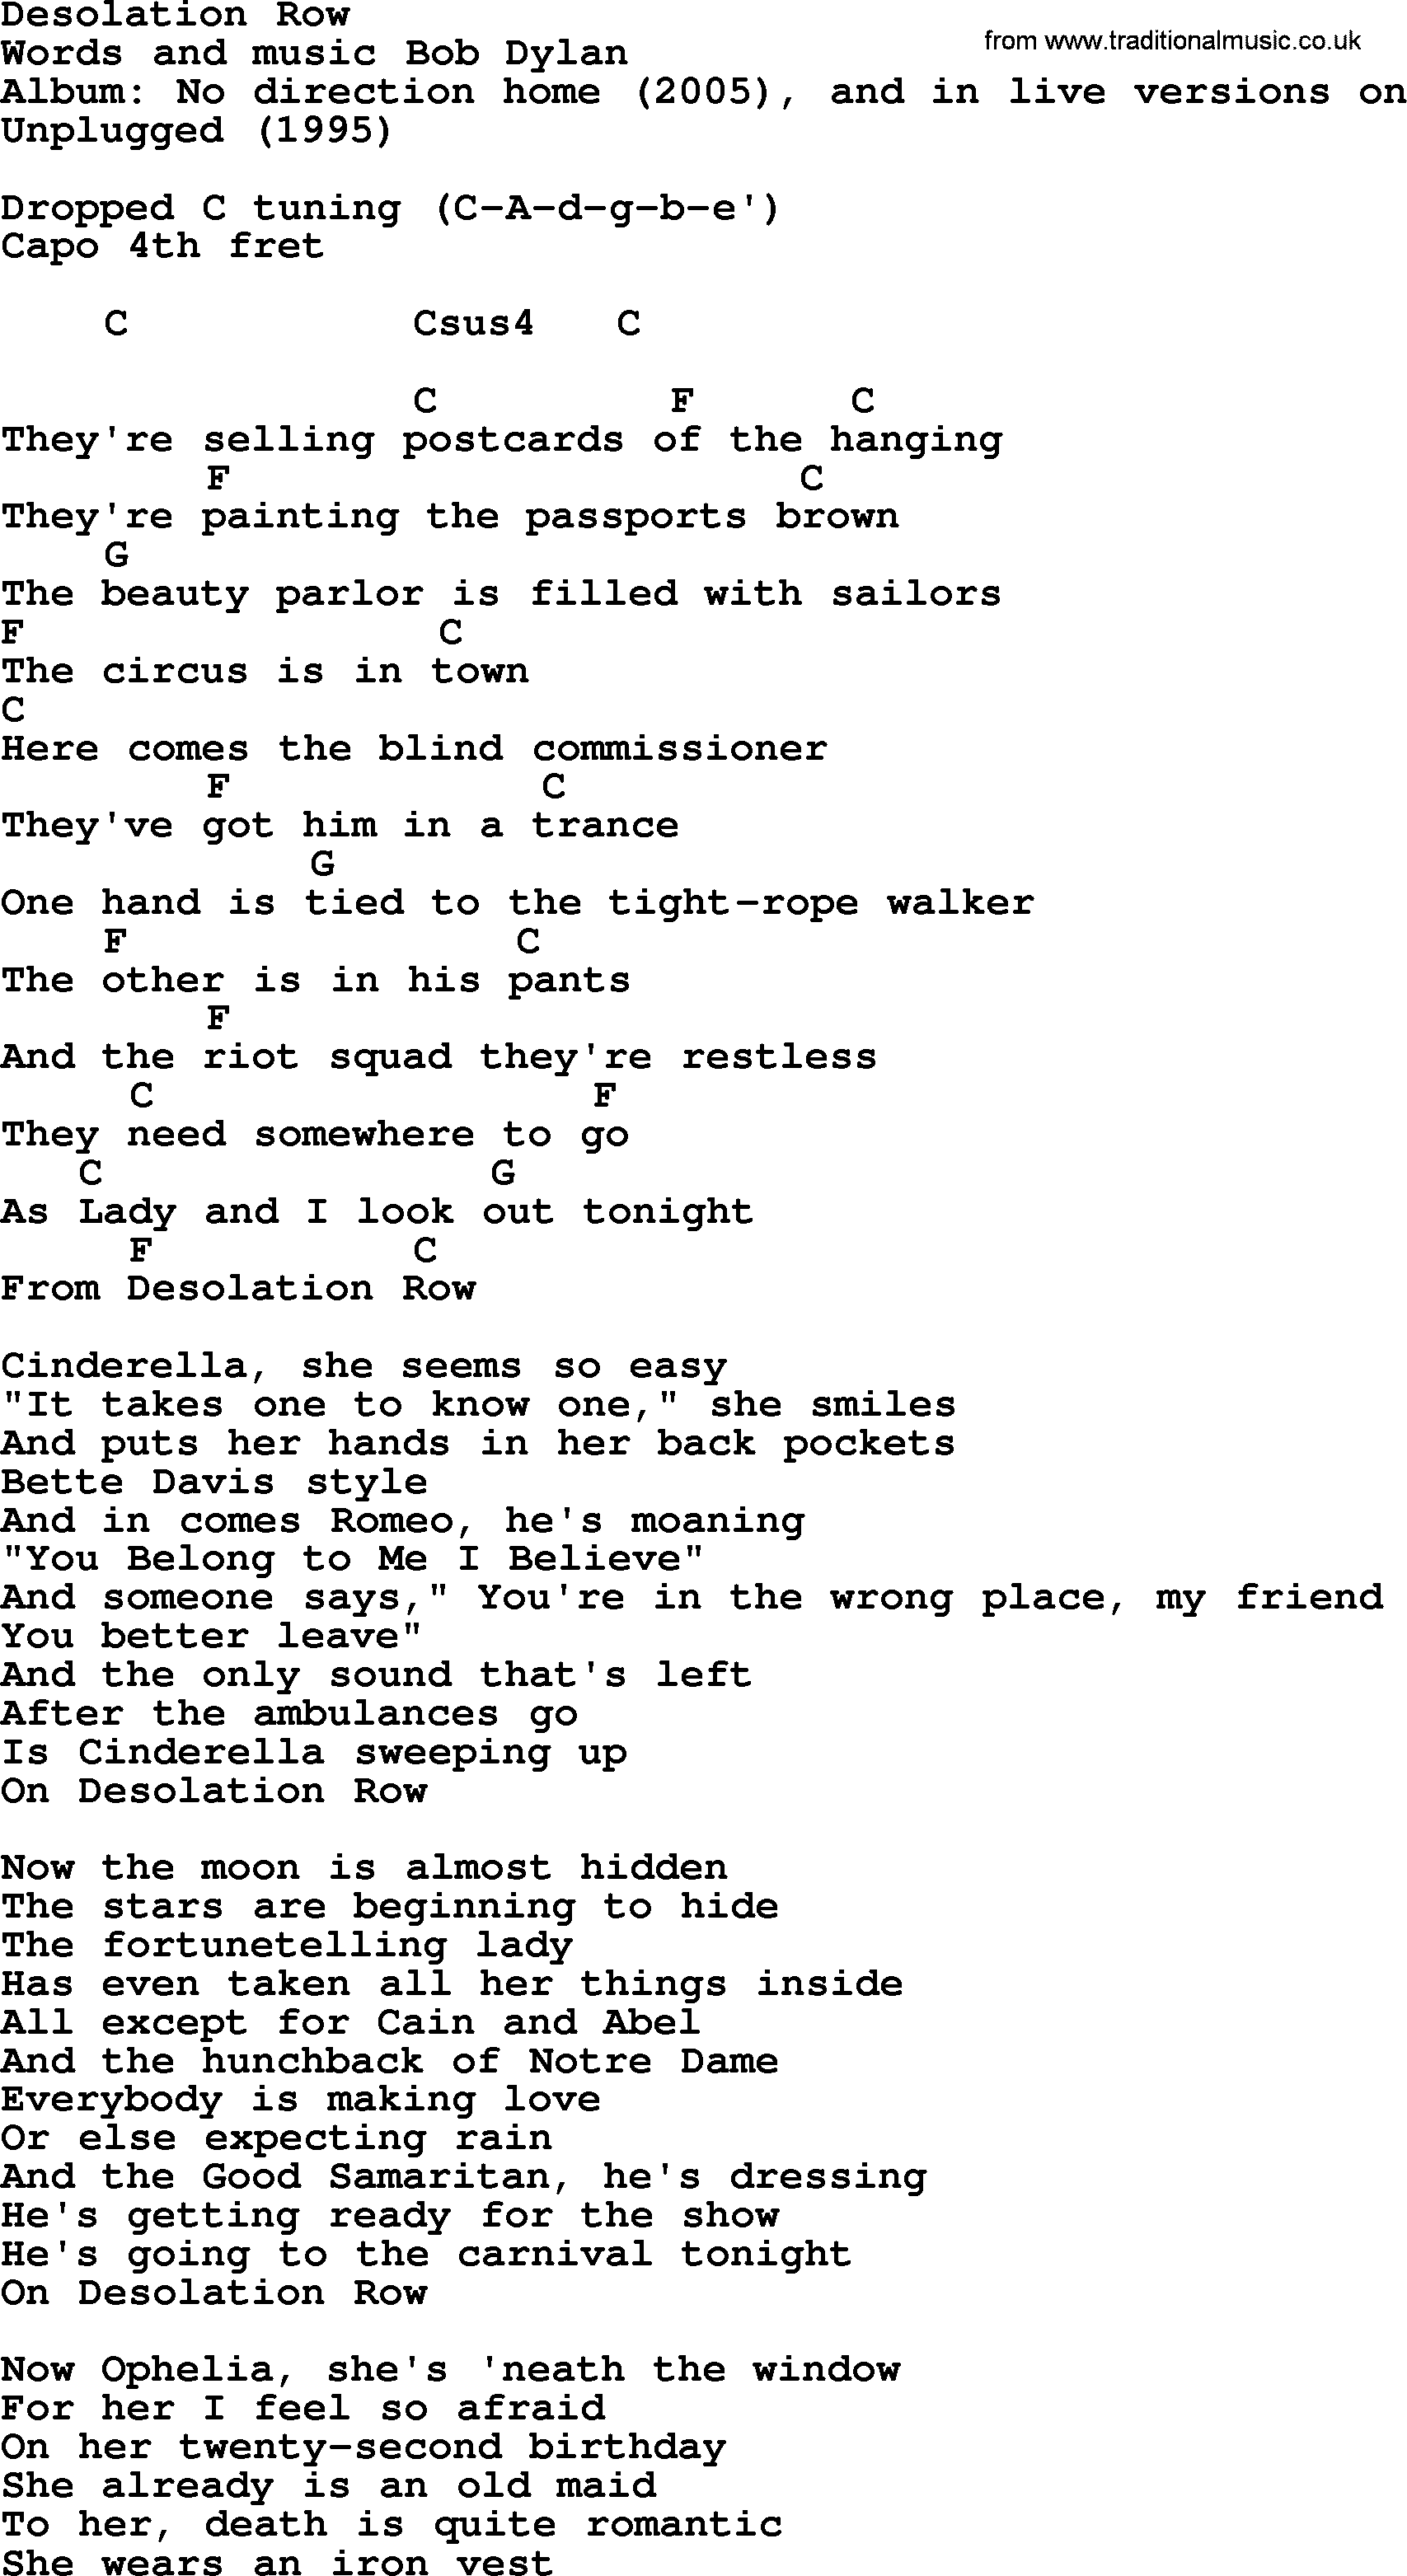 Bob Dylan song, lyrics with chords - Desolation Row